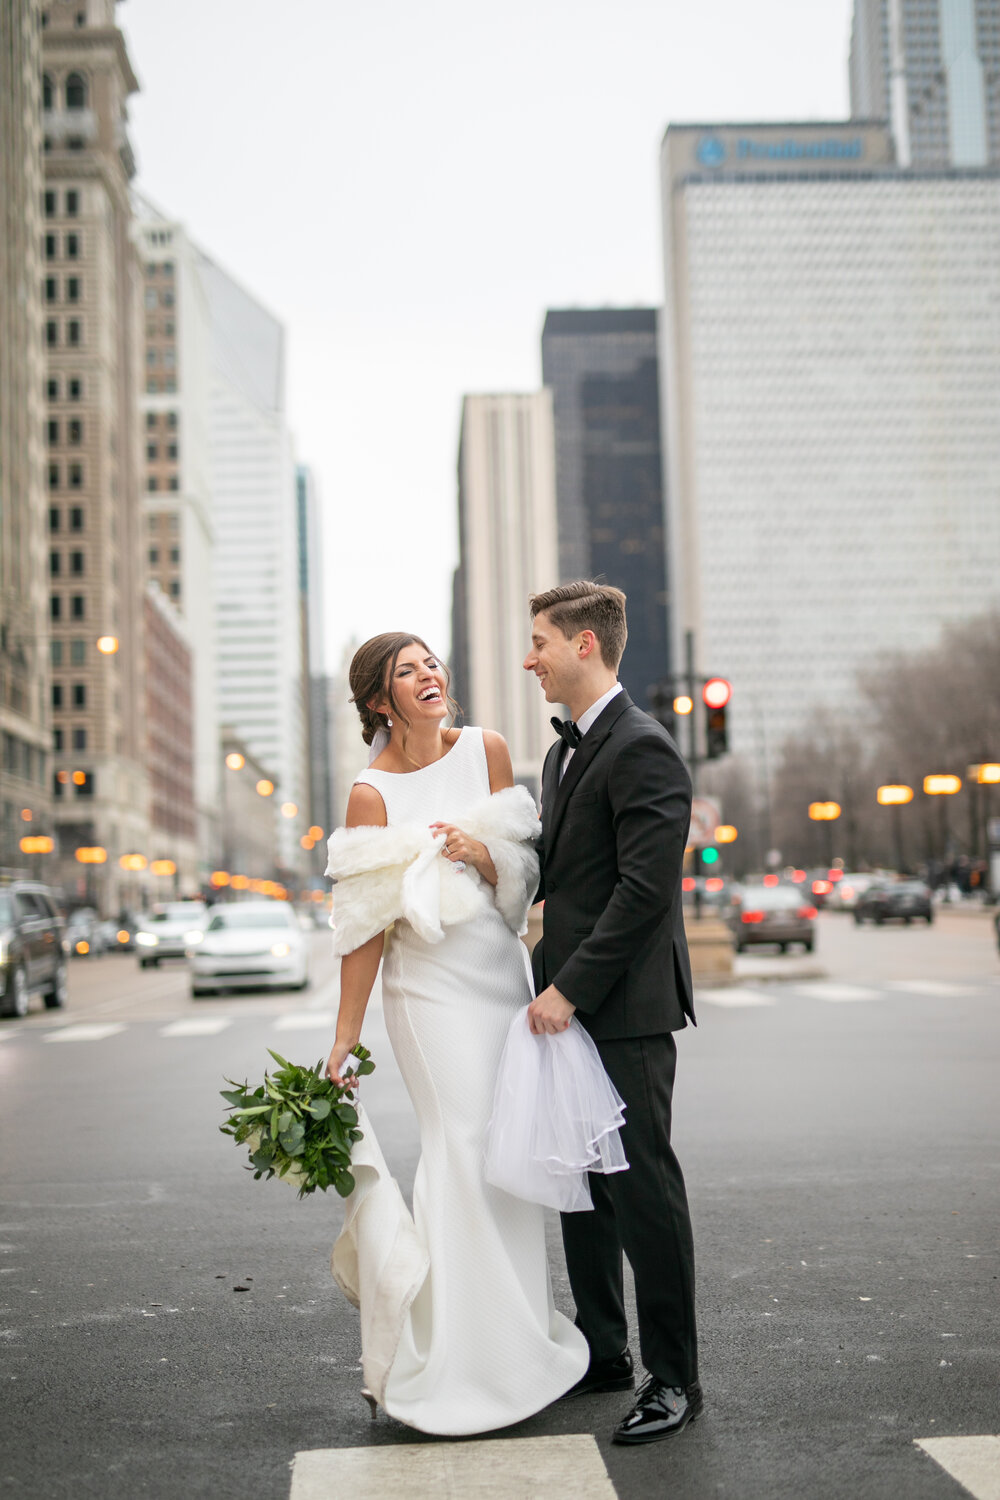 Palmer house hilton chicago wedding photo ideas inspiration laguna lofts photographerPOST